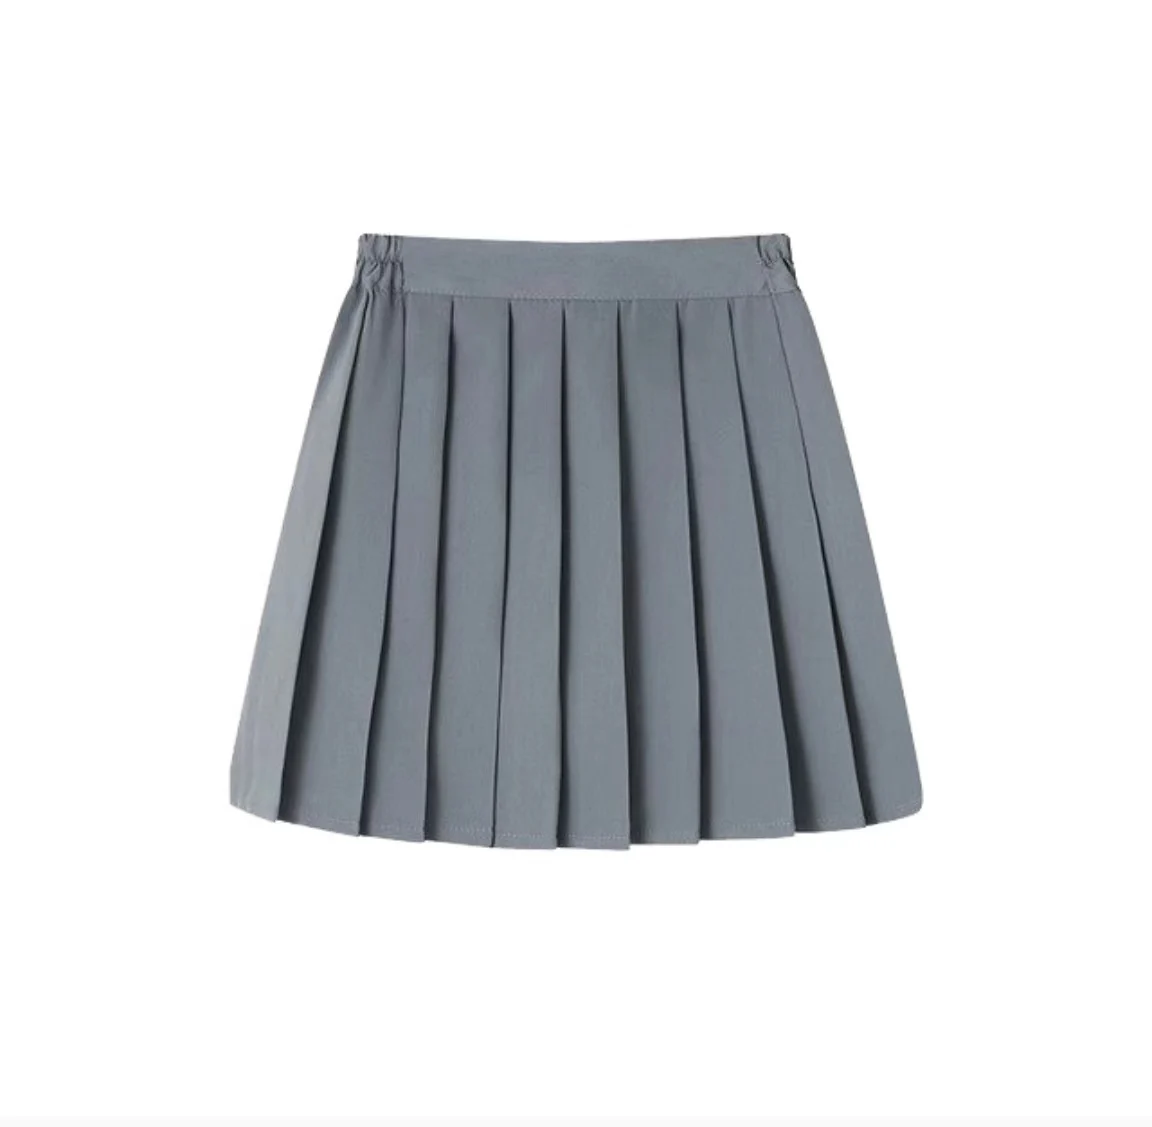 Cosplay pleated skirt Girls skirt half pleated skirt